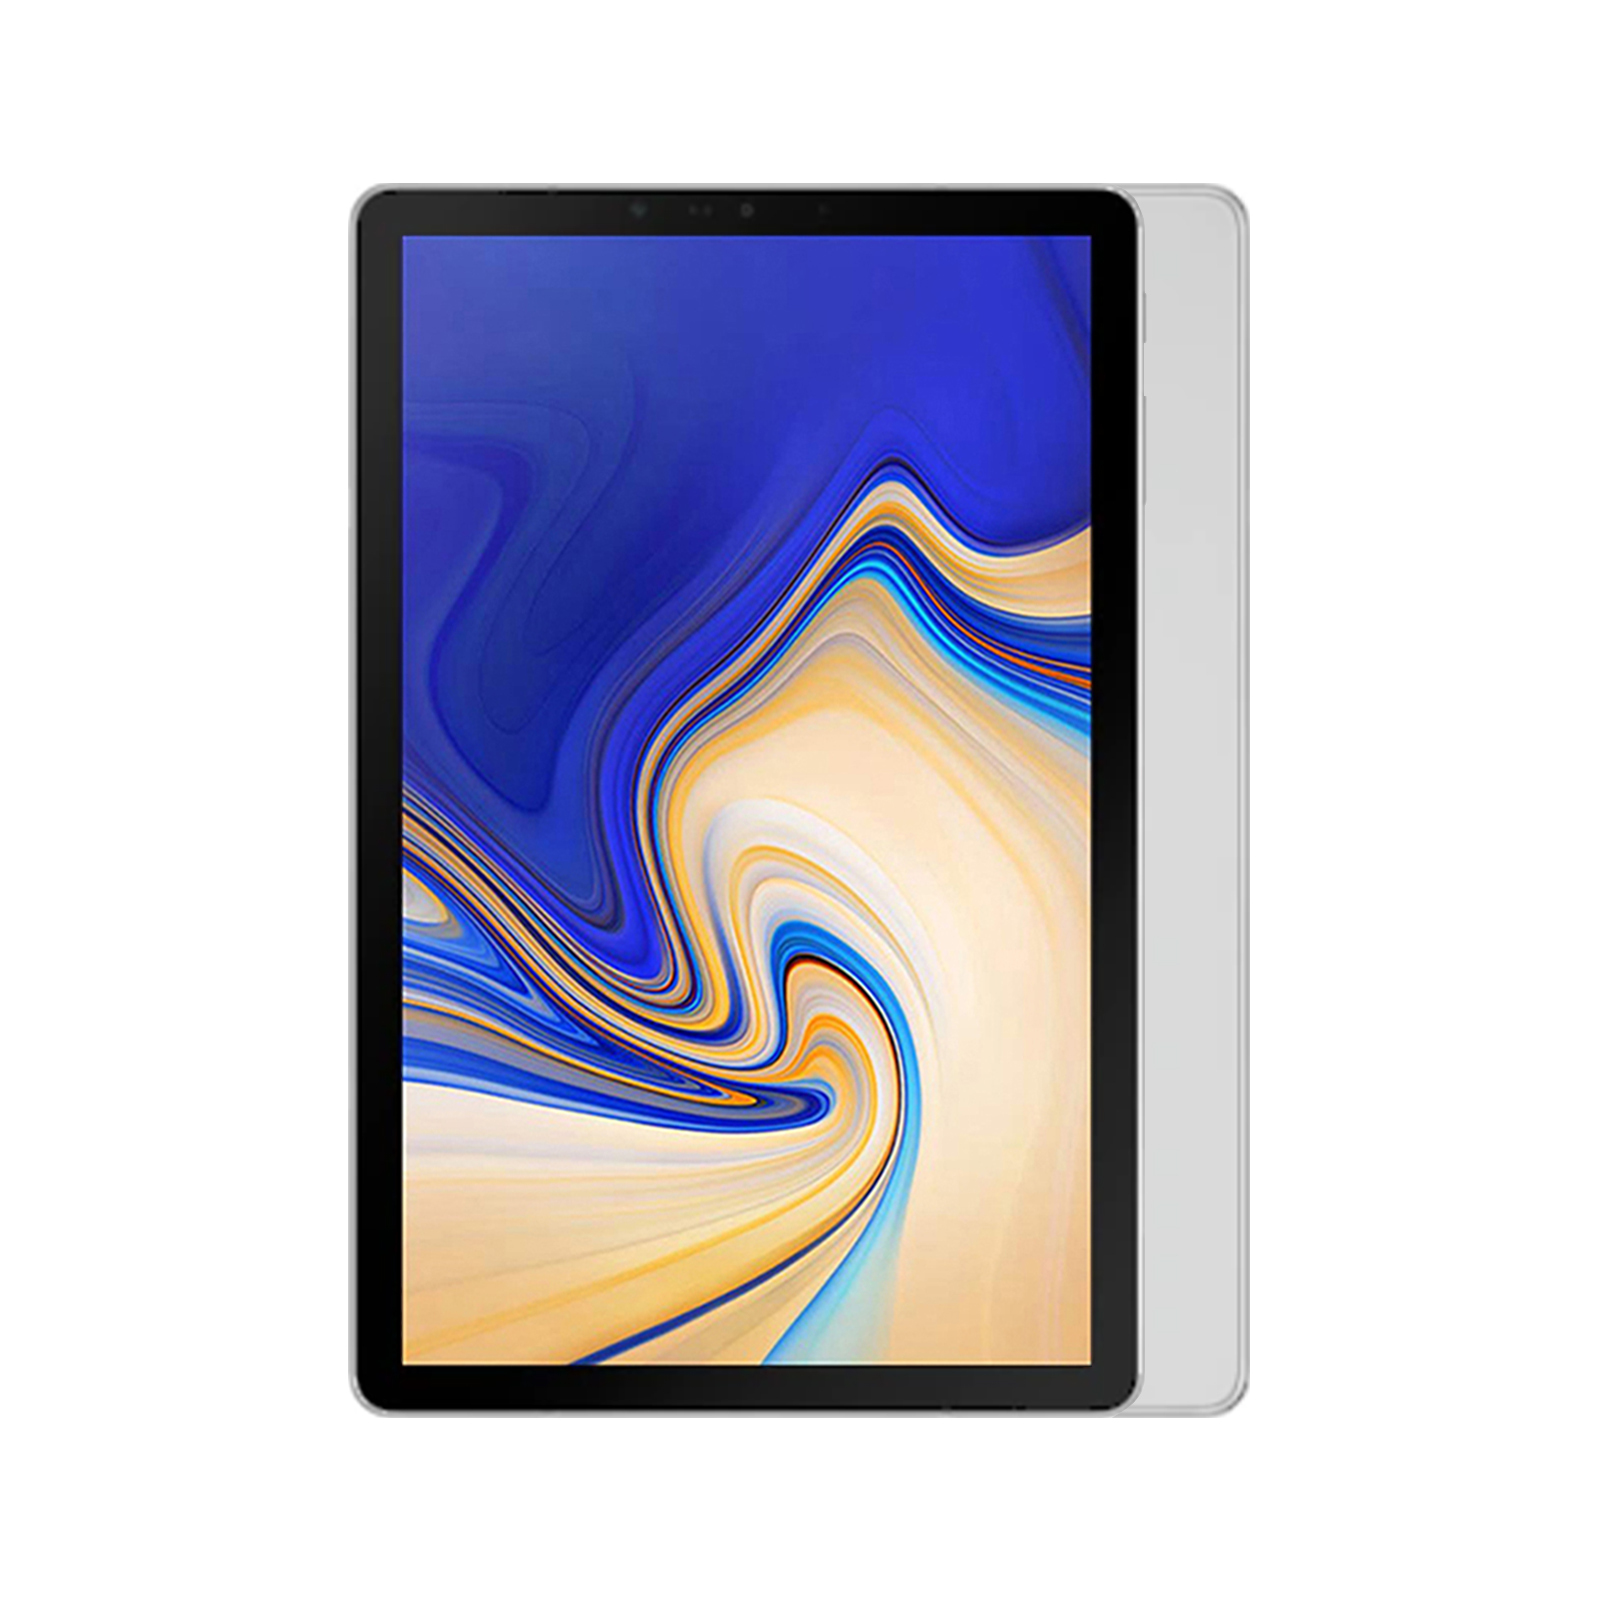 Samsung Galaxy Tab S4 (T835) [WiFi/4G] [64GB] [White] [As New]